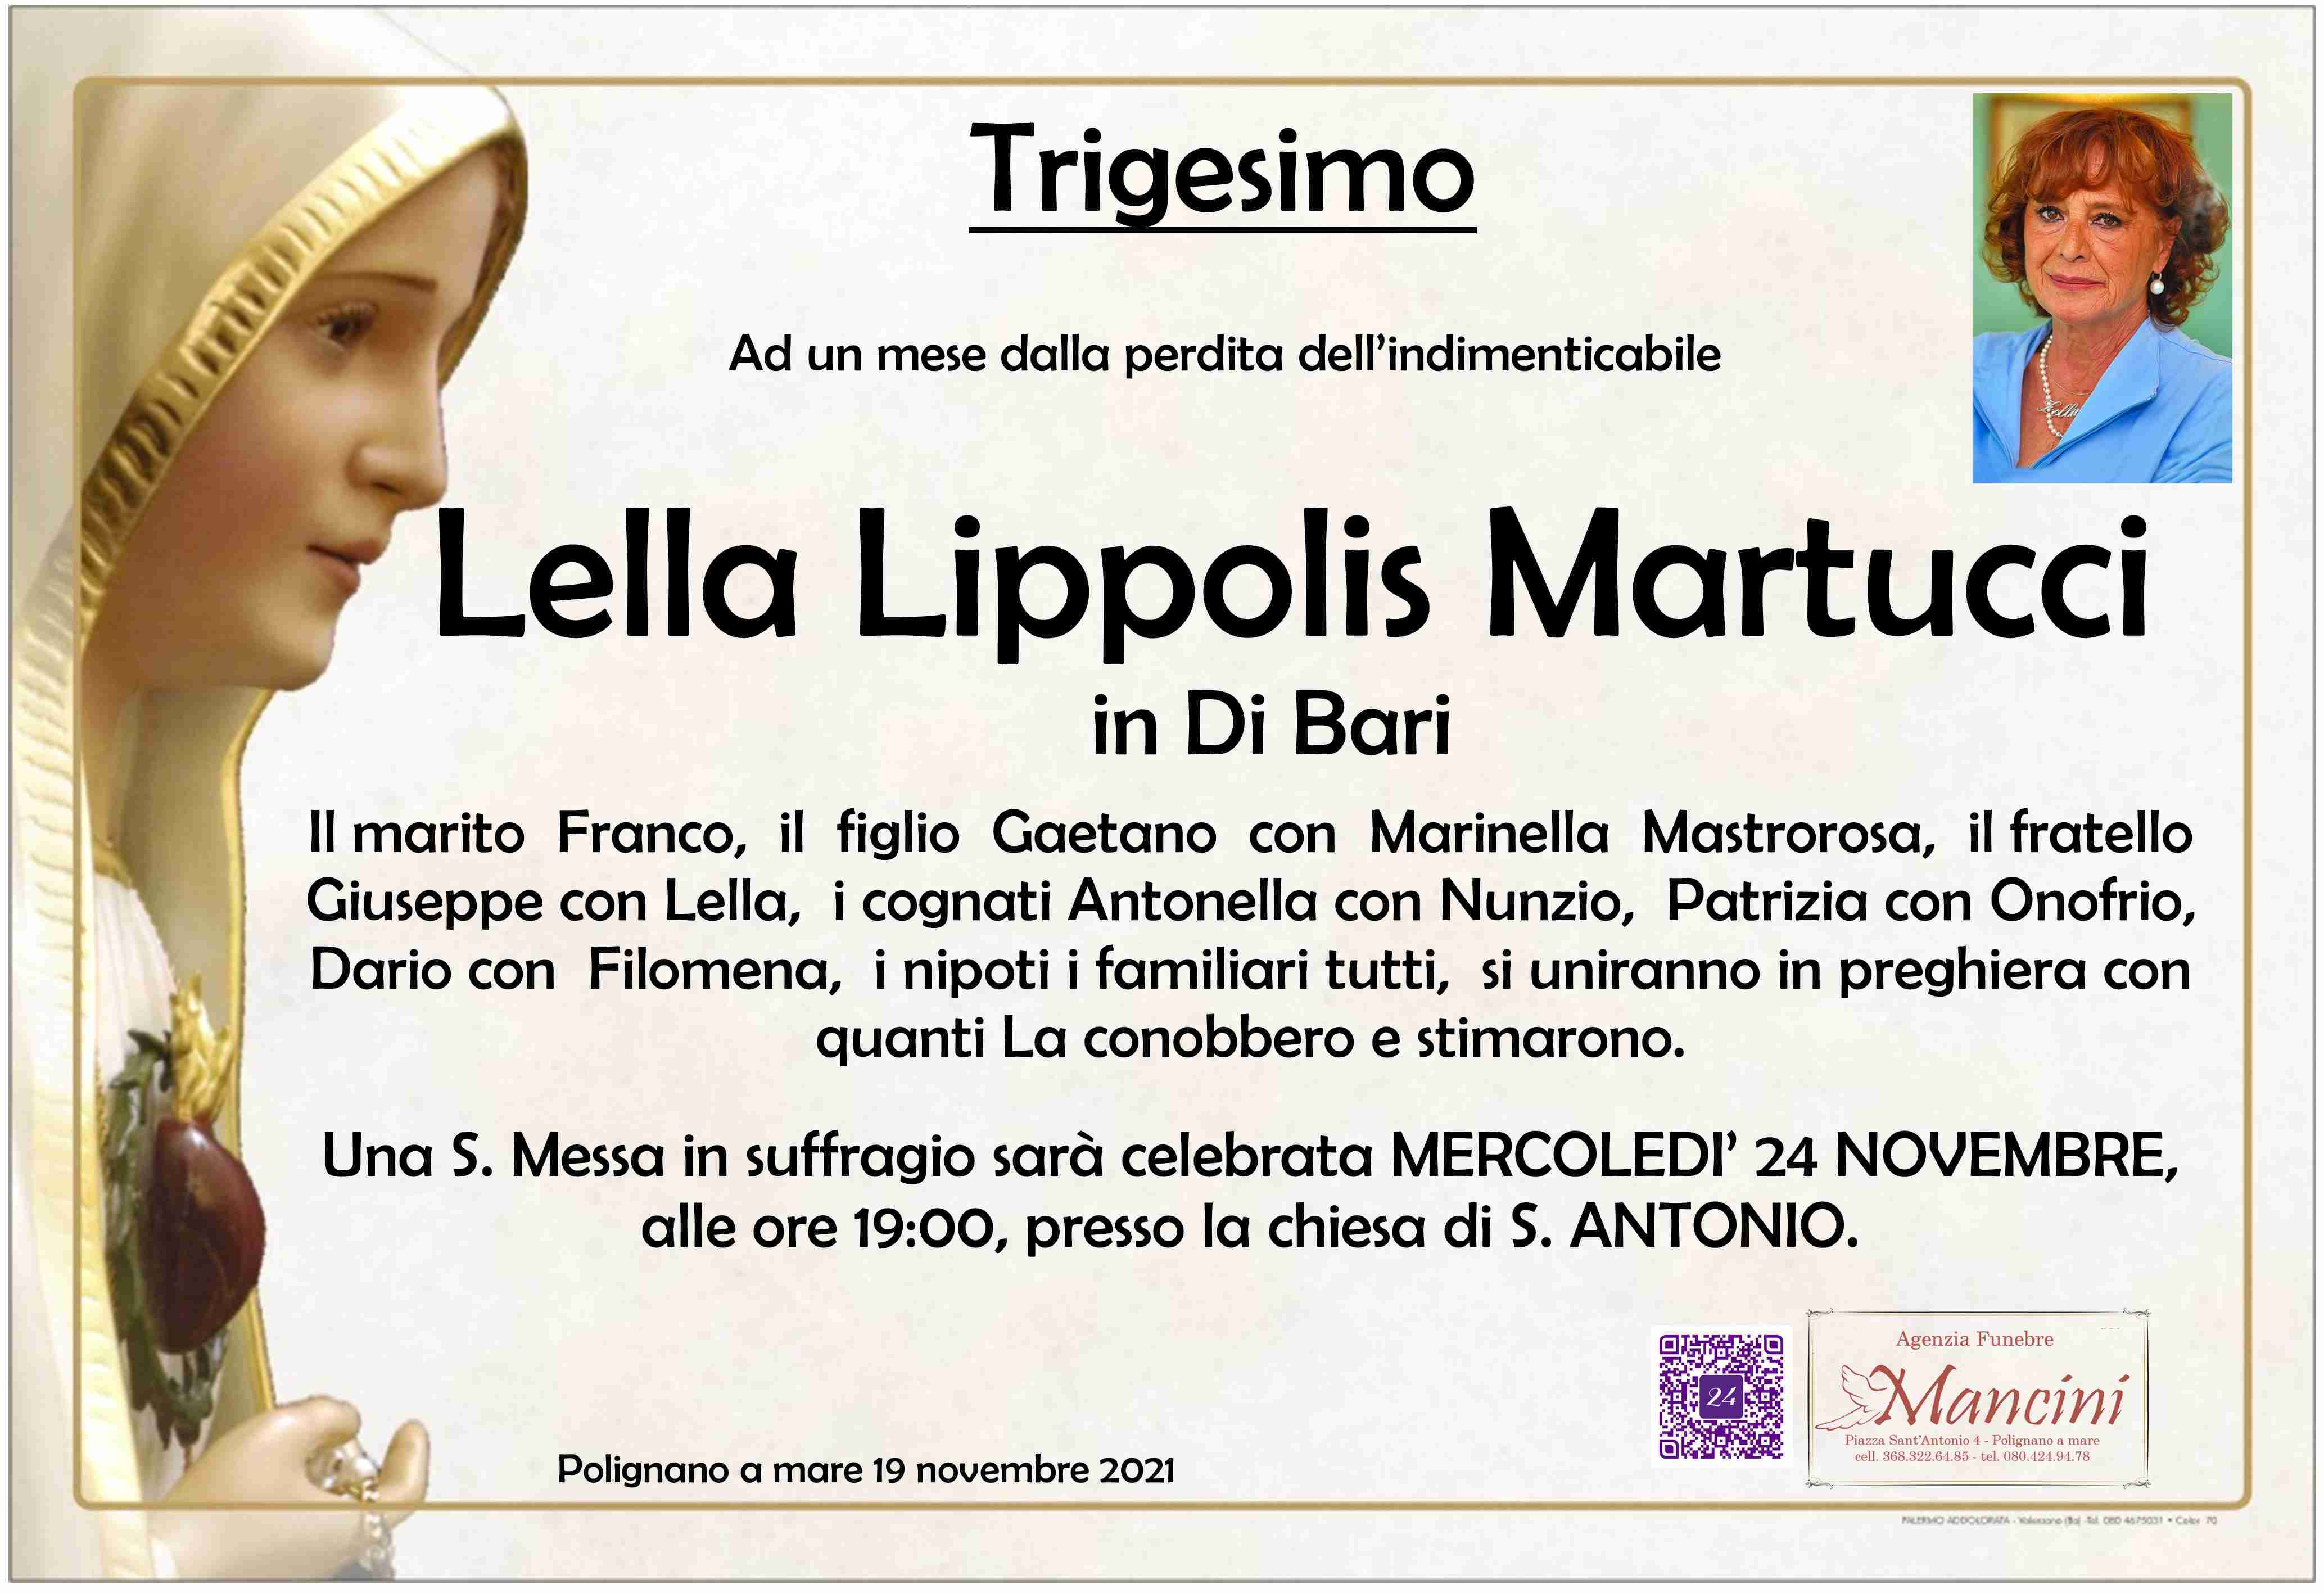 Lella Lippolis Martucci